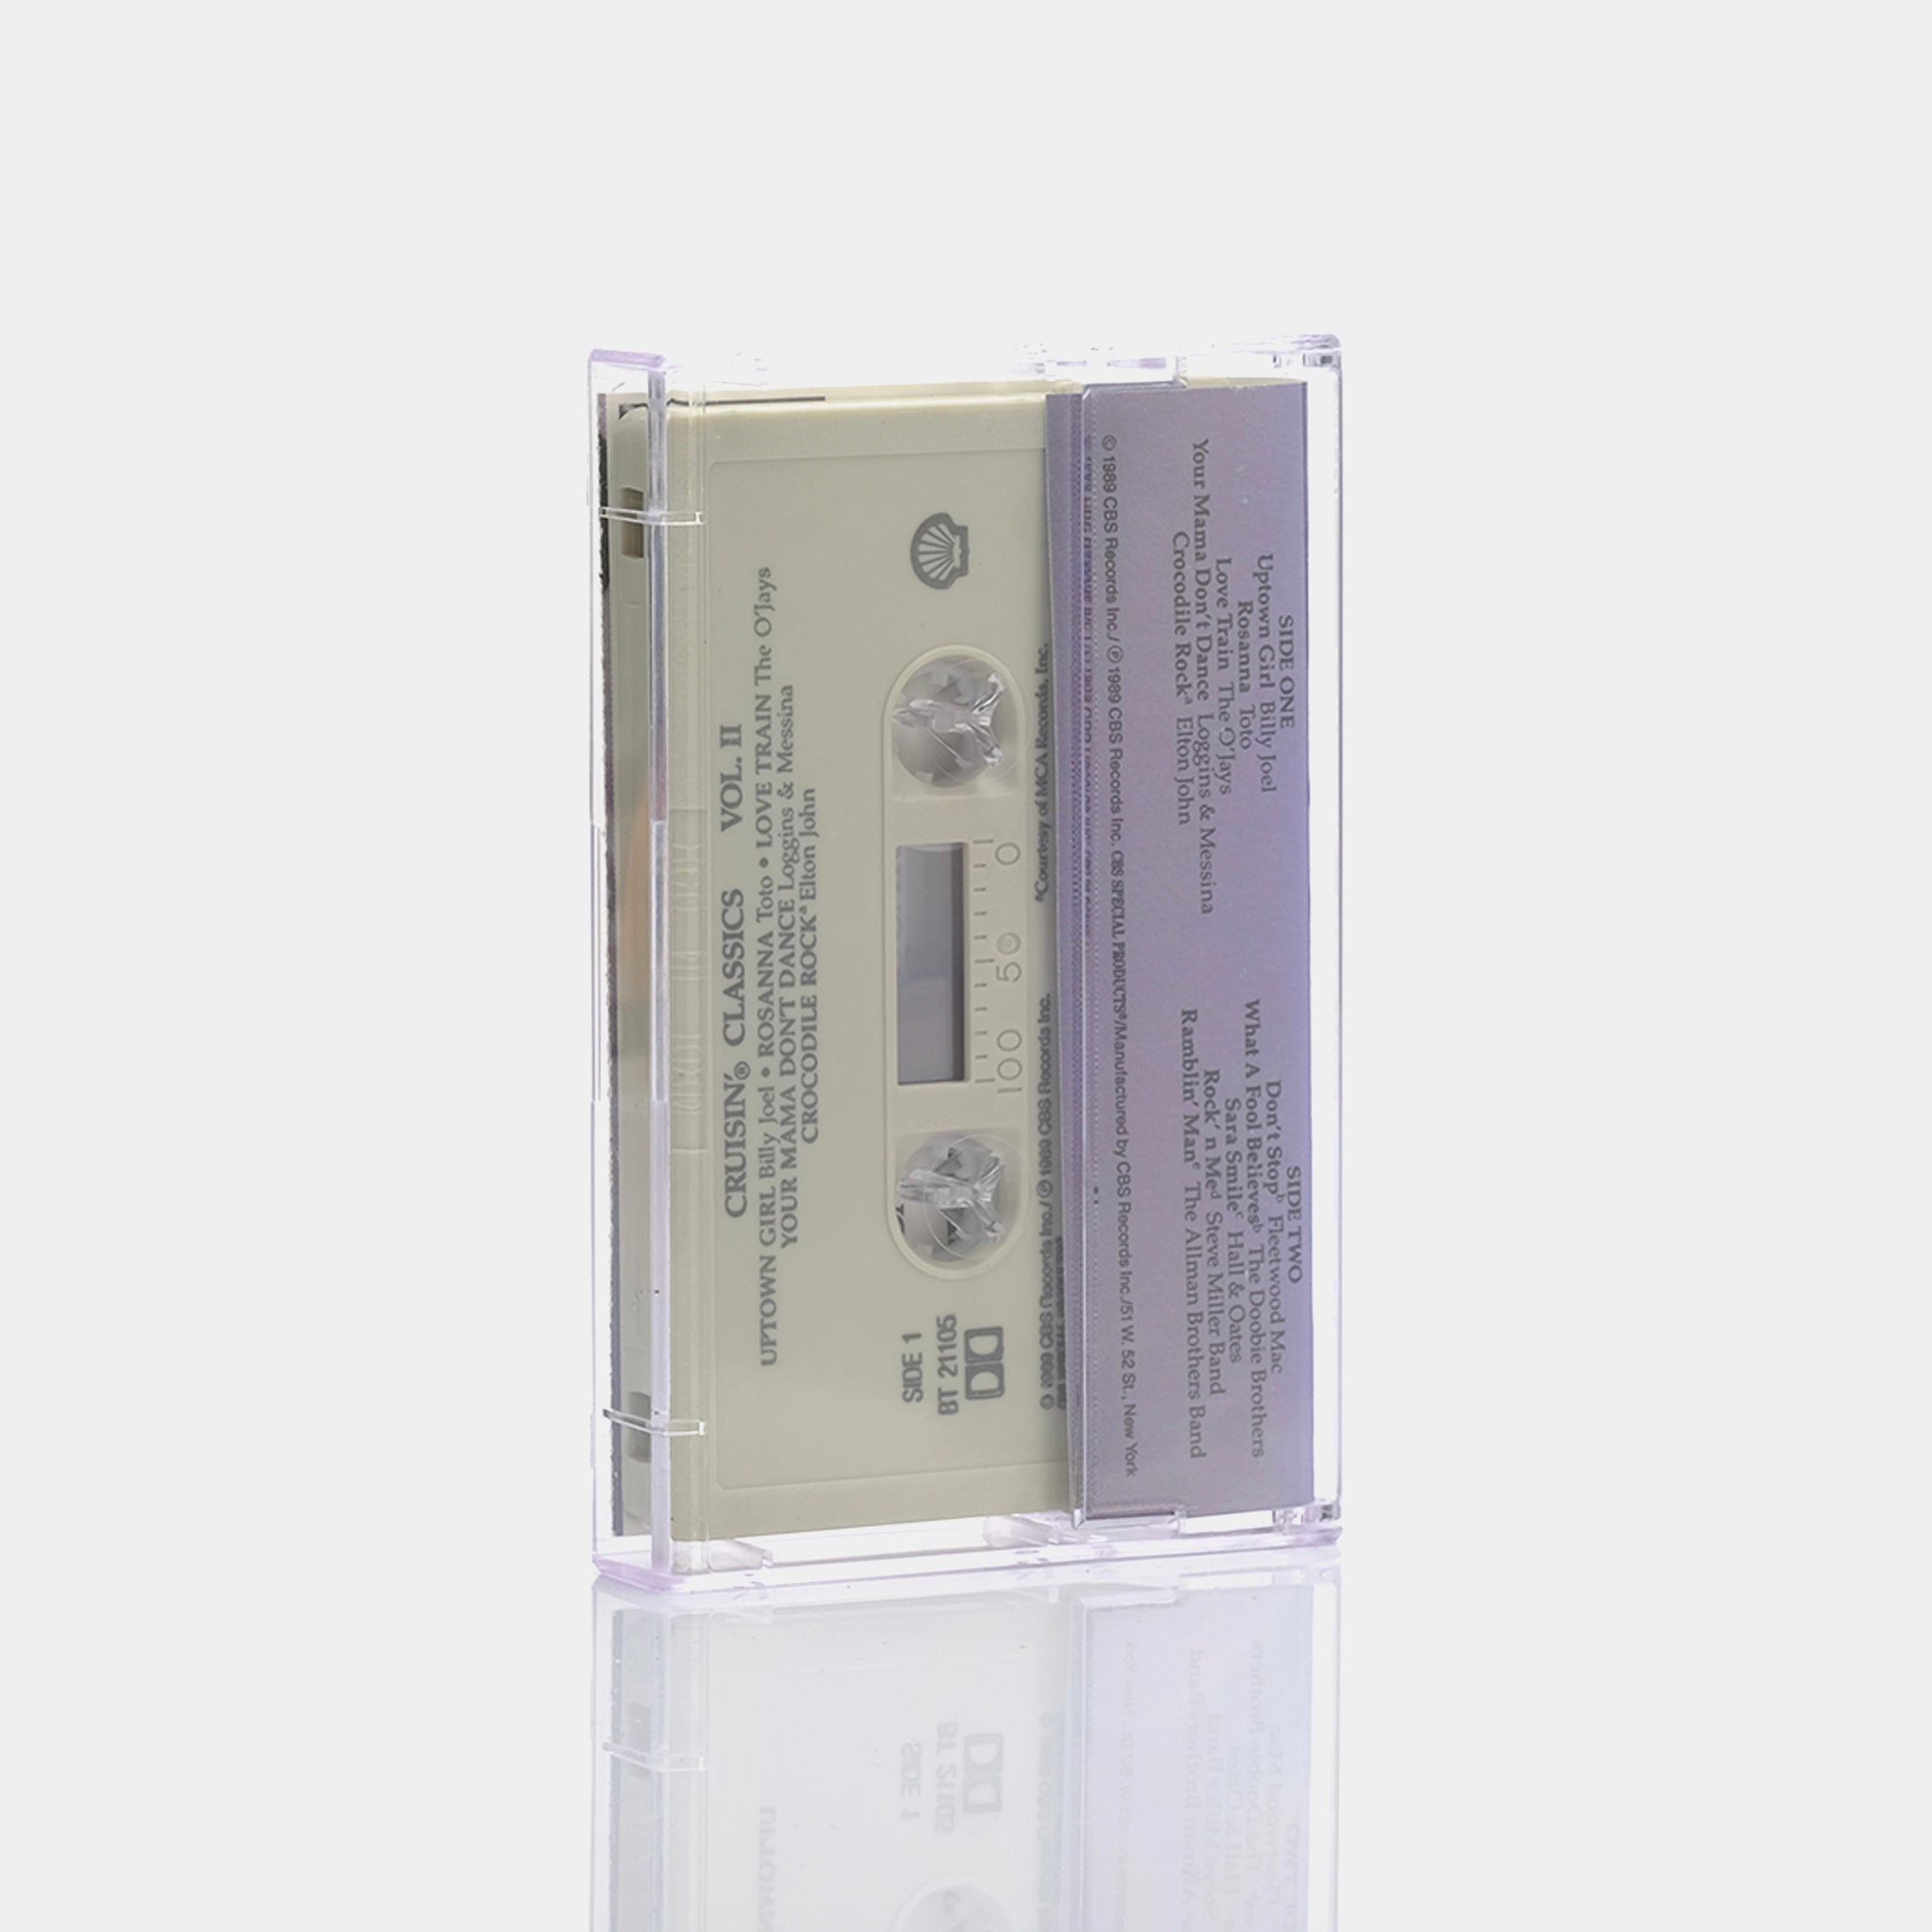 Cruisin' Classics Vol. II 70's & 80's Cassette Tape